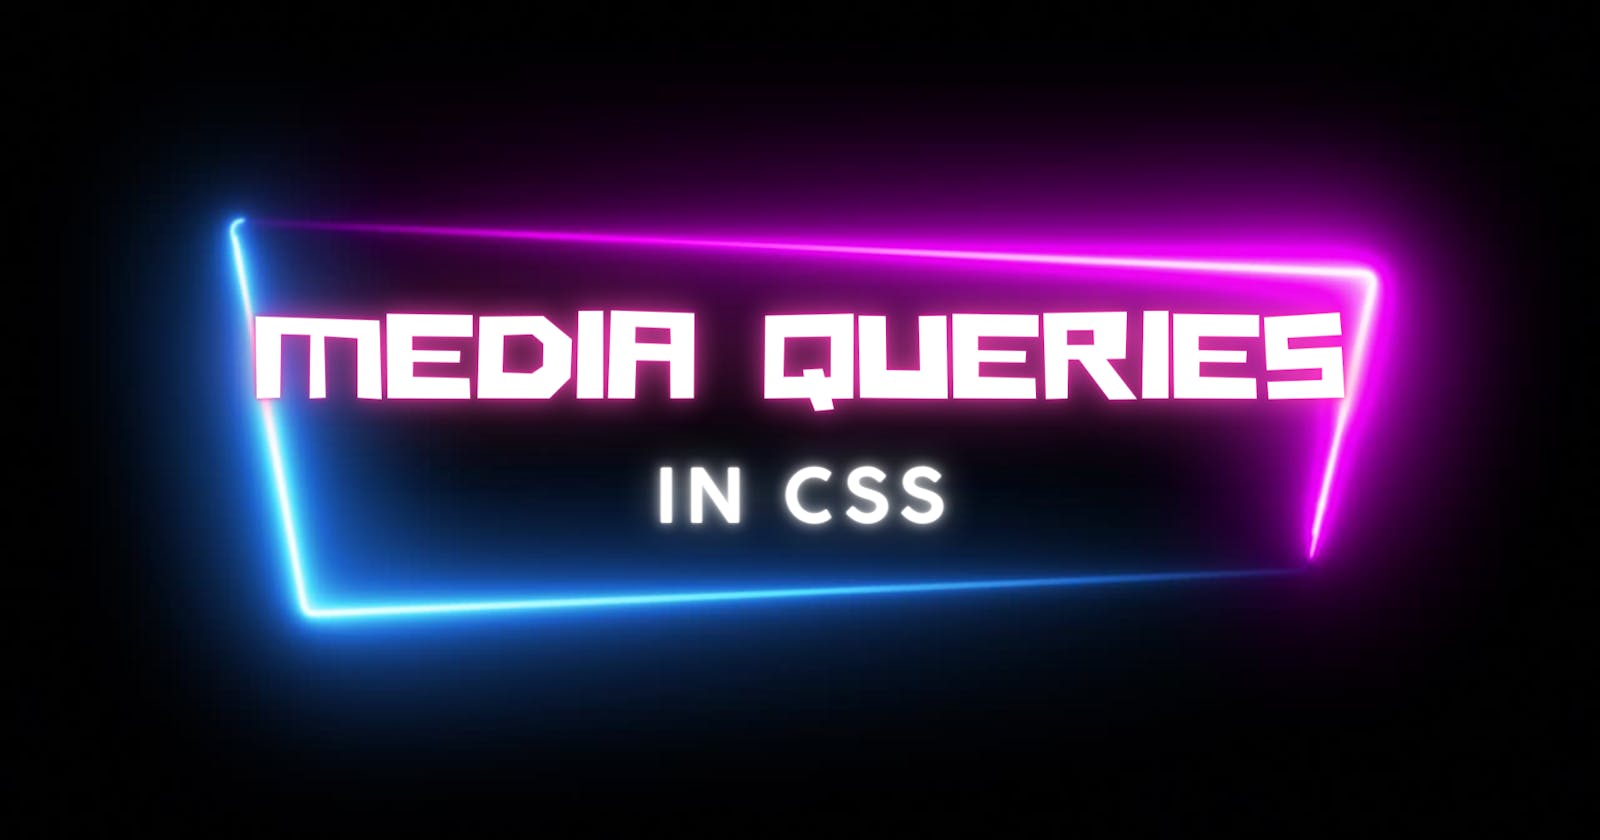 Media Queries in CSS